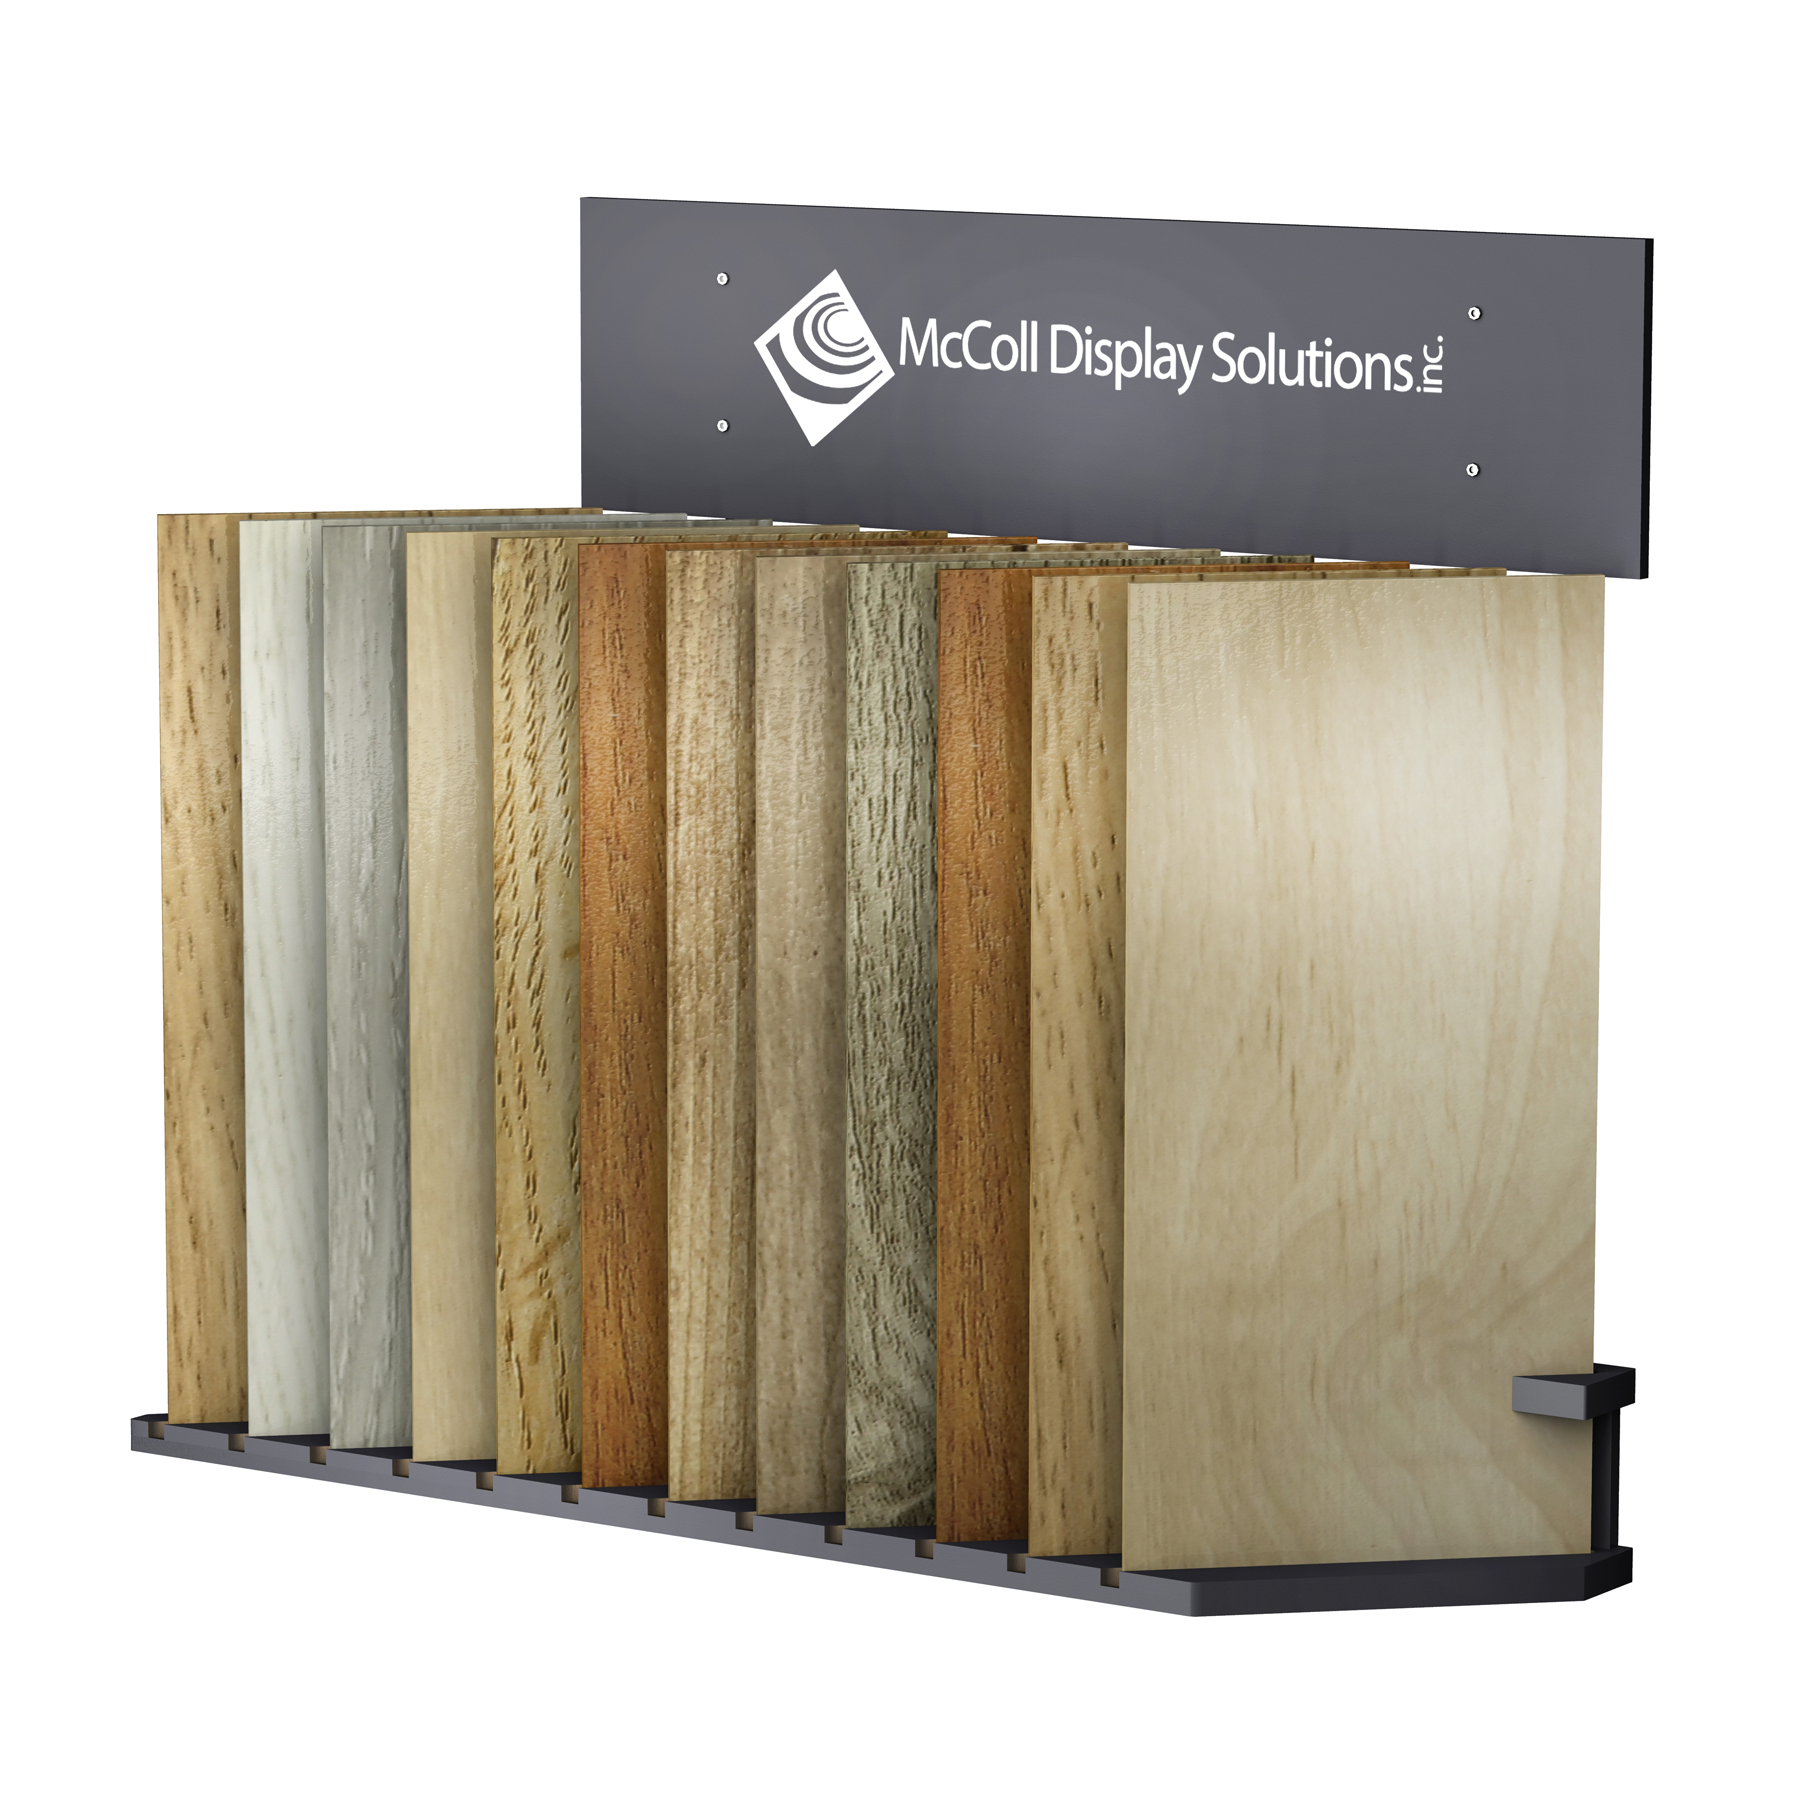 CD100 Slotted Floor Stand Signage Displays Wood Tile Marble Stone Flooring McColl Display